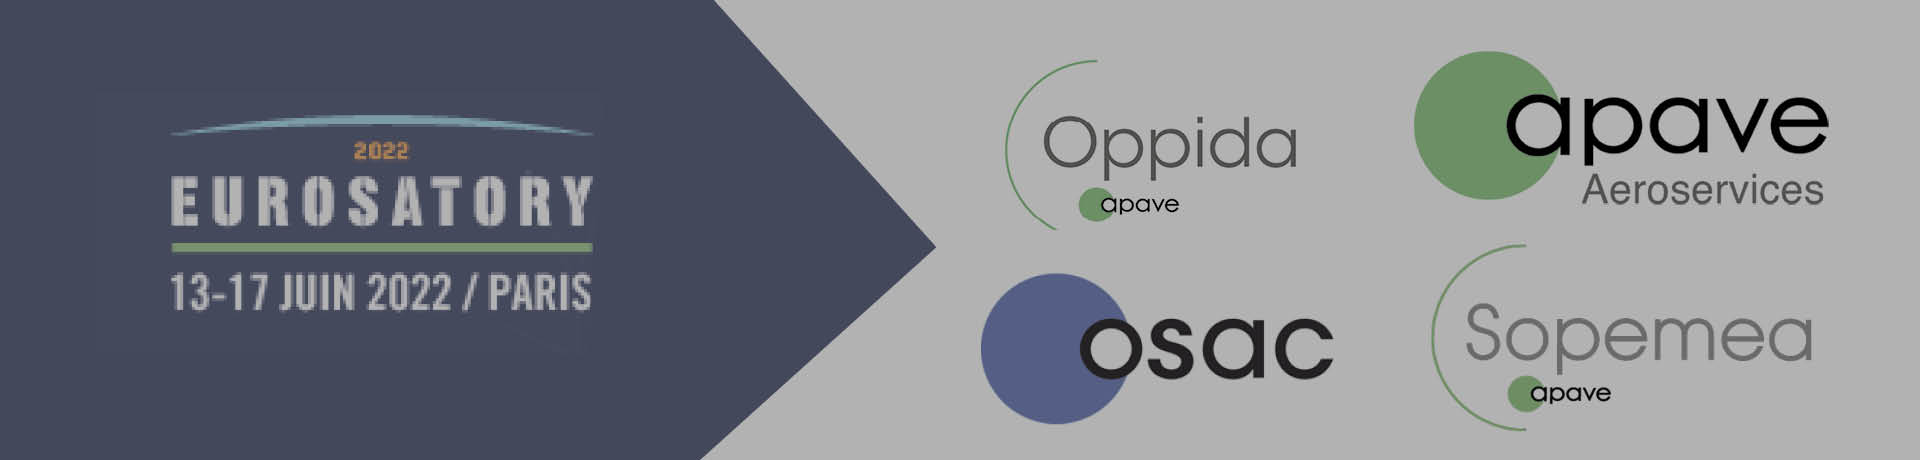 Eurosatory, Oppida, Osac, apave aeroservices and Sopemea Logo's